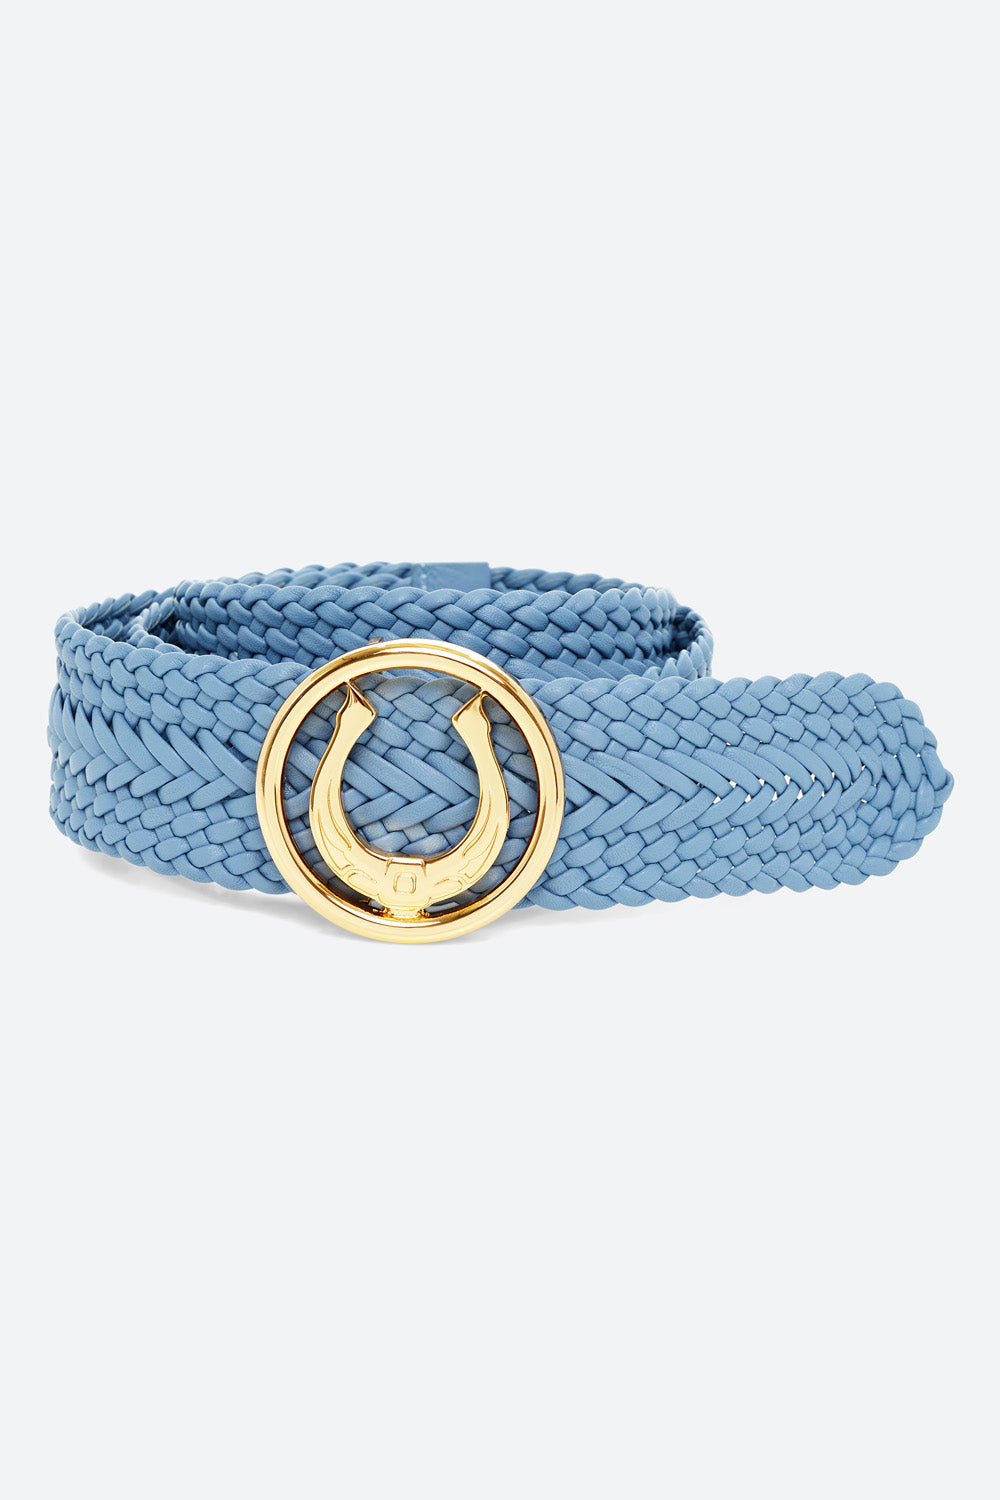 Women's Lucky Belt in Sky Blue, Polished Gold-toned Horseshoe Buckle